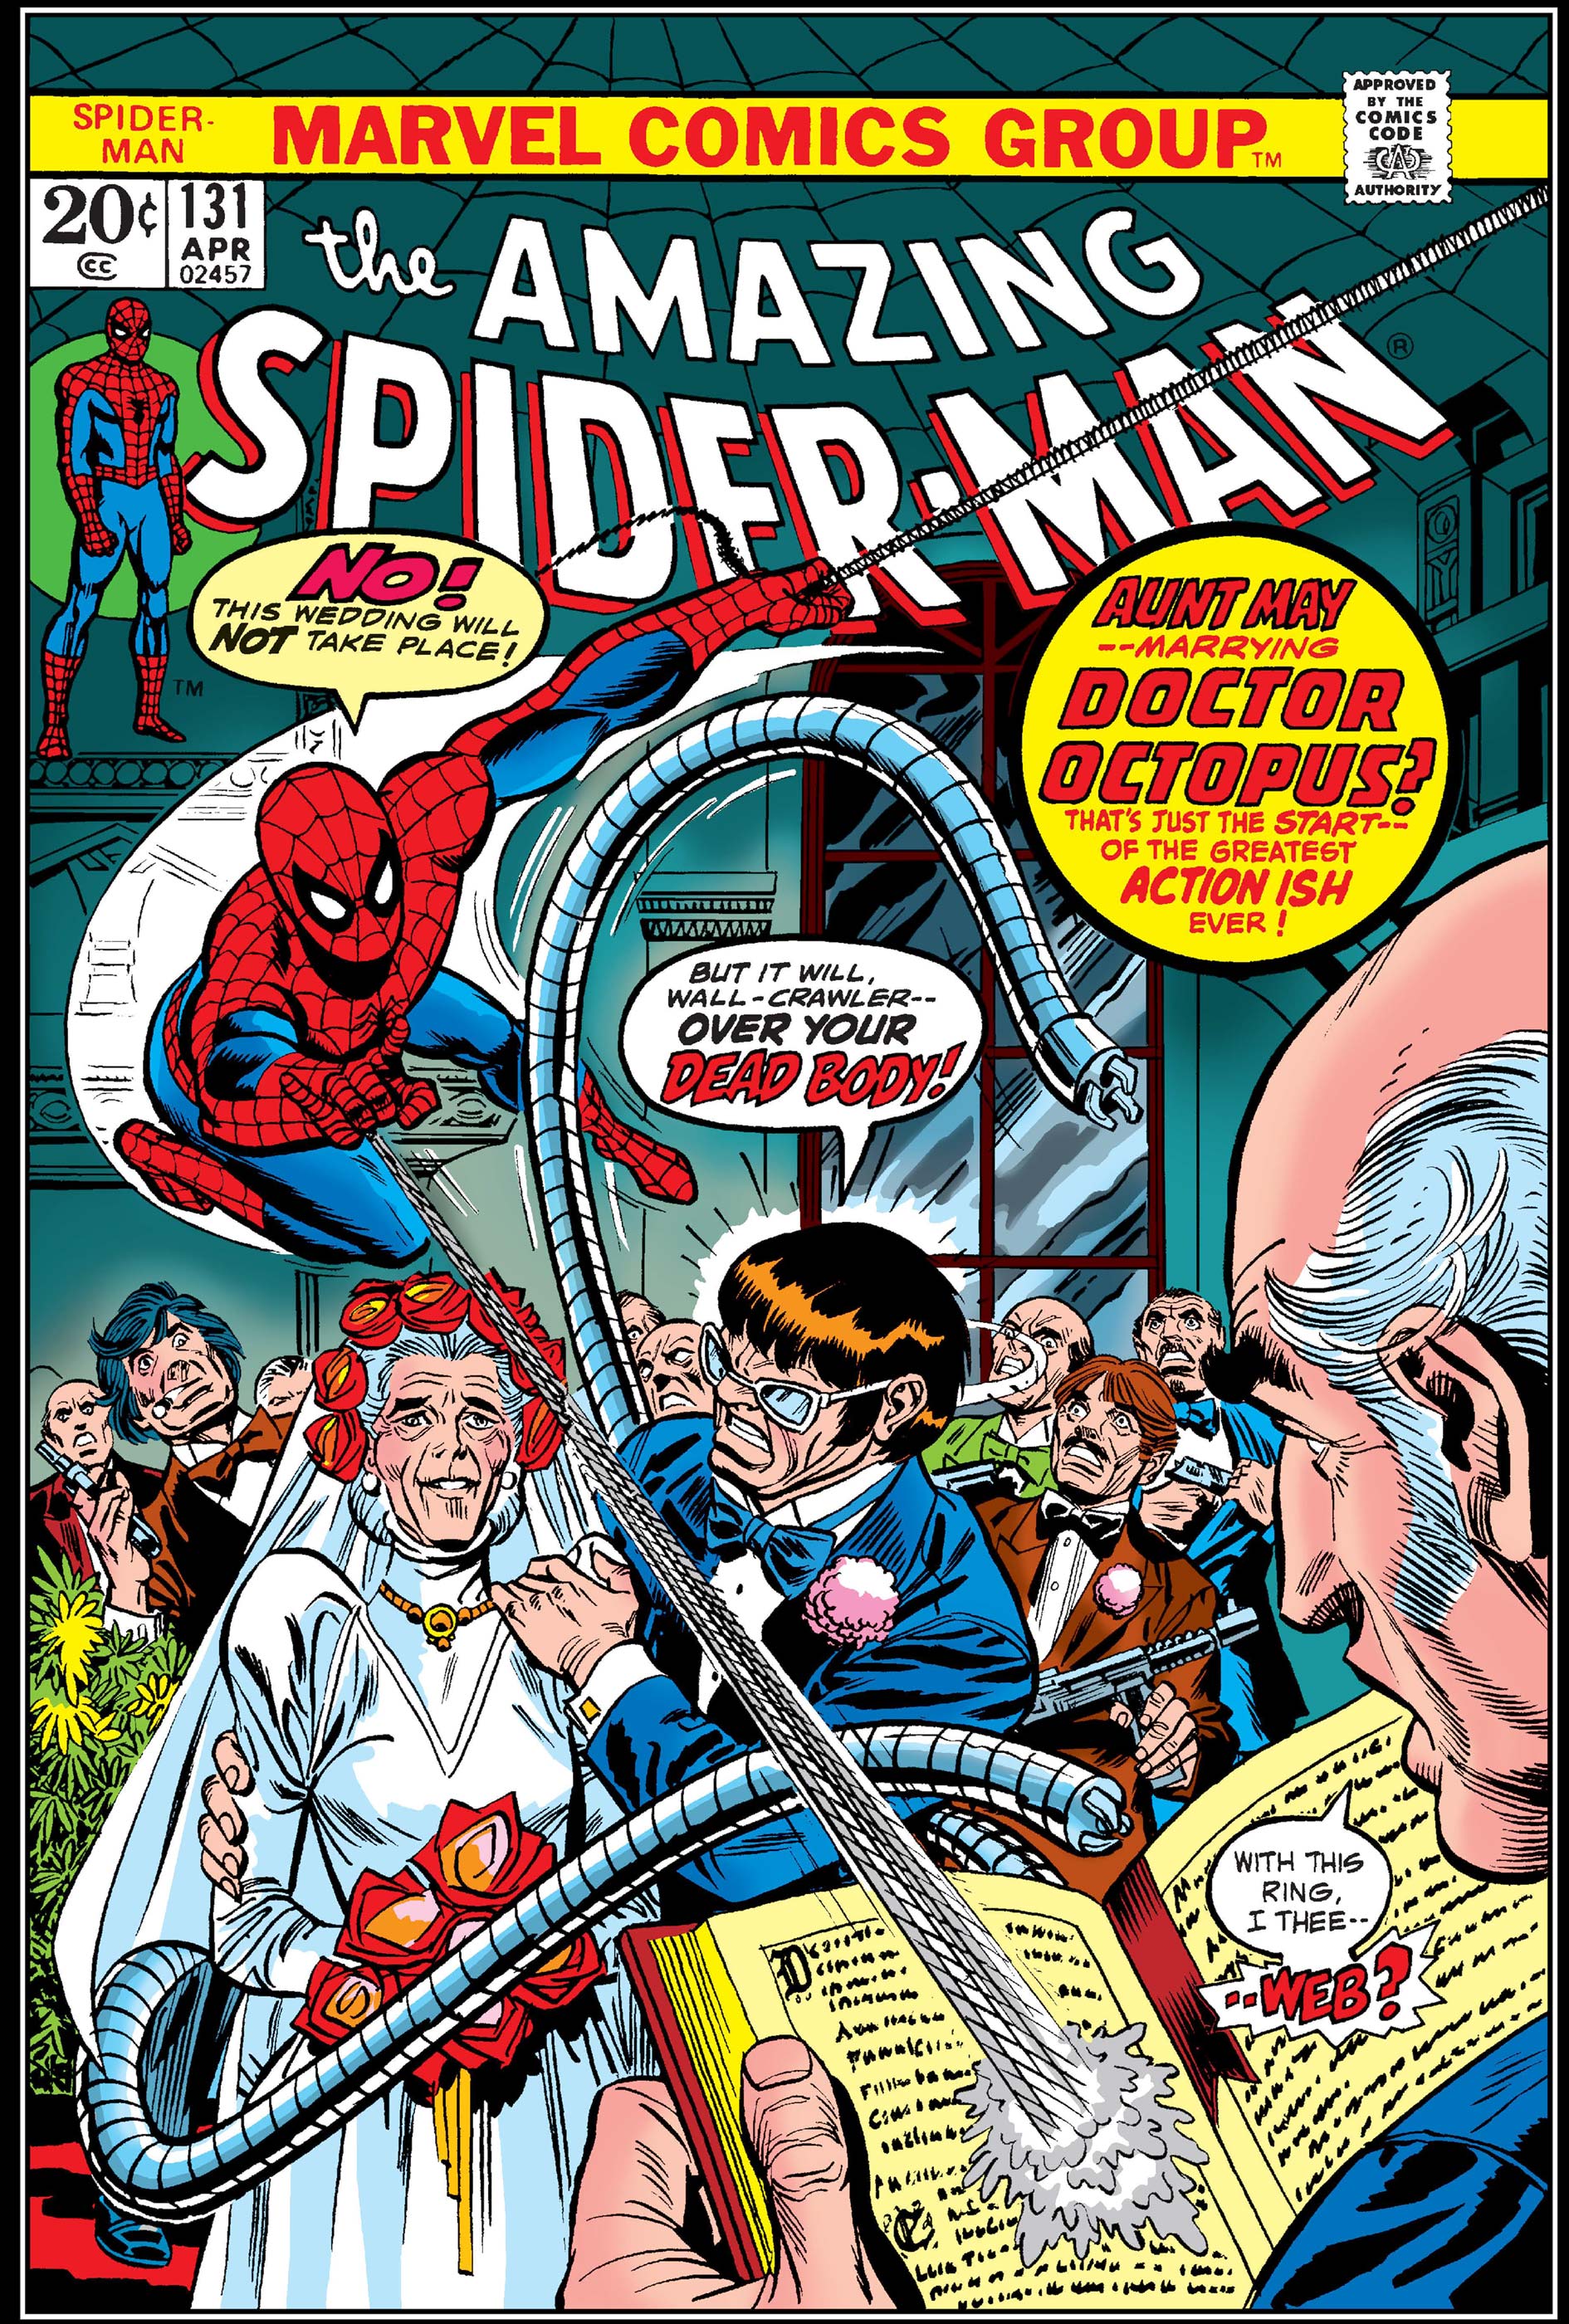 The Amazing Spider-Man (1963) #131